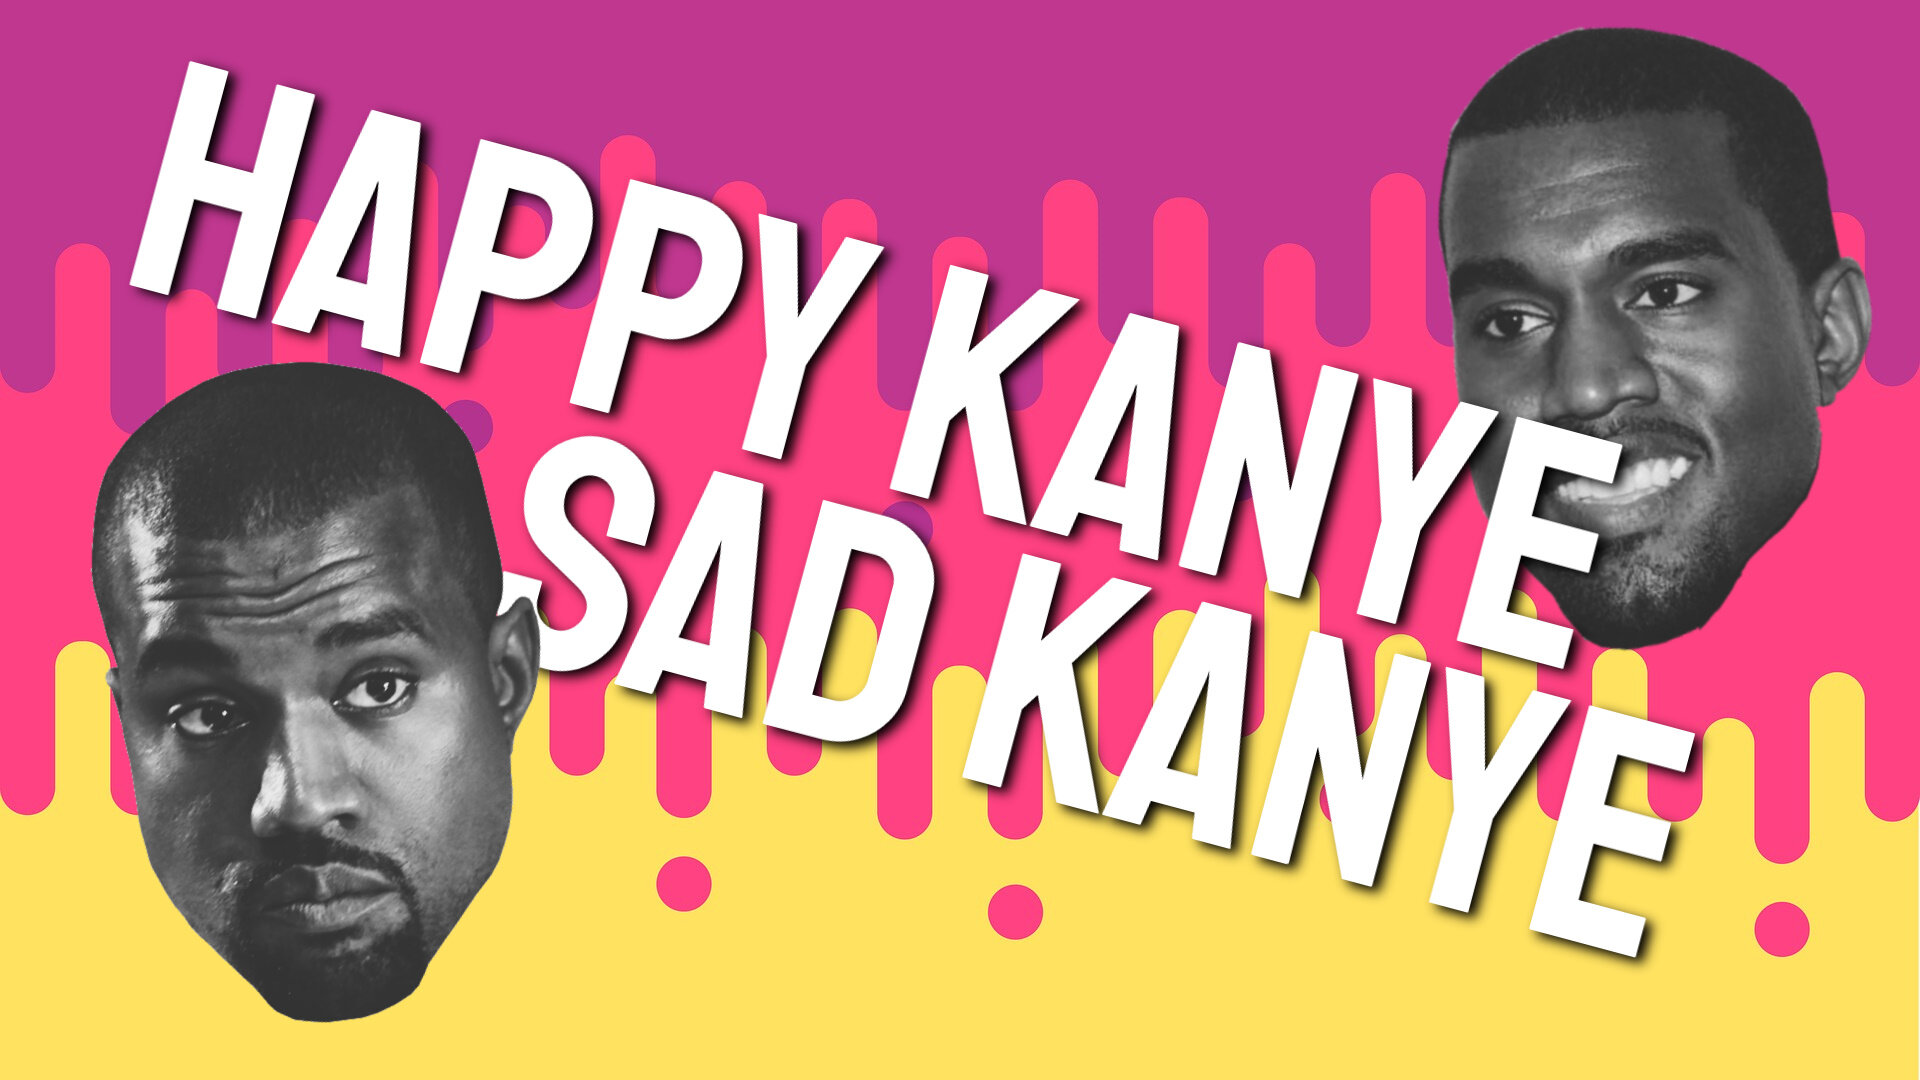 Happy Kanye Sad Kanye